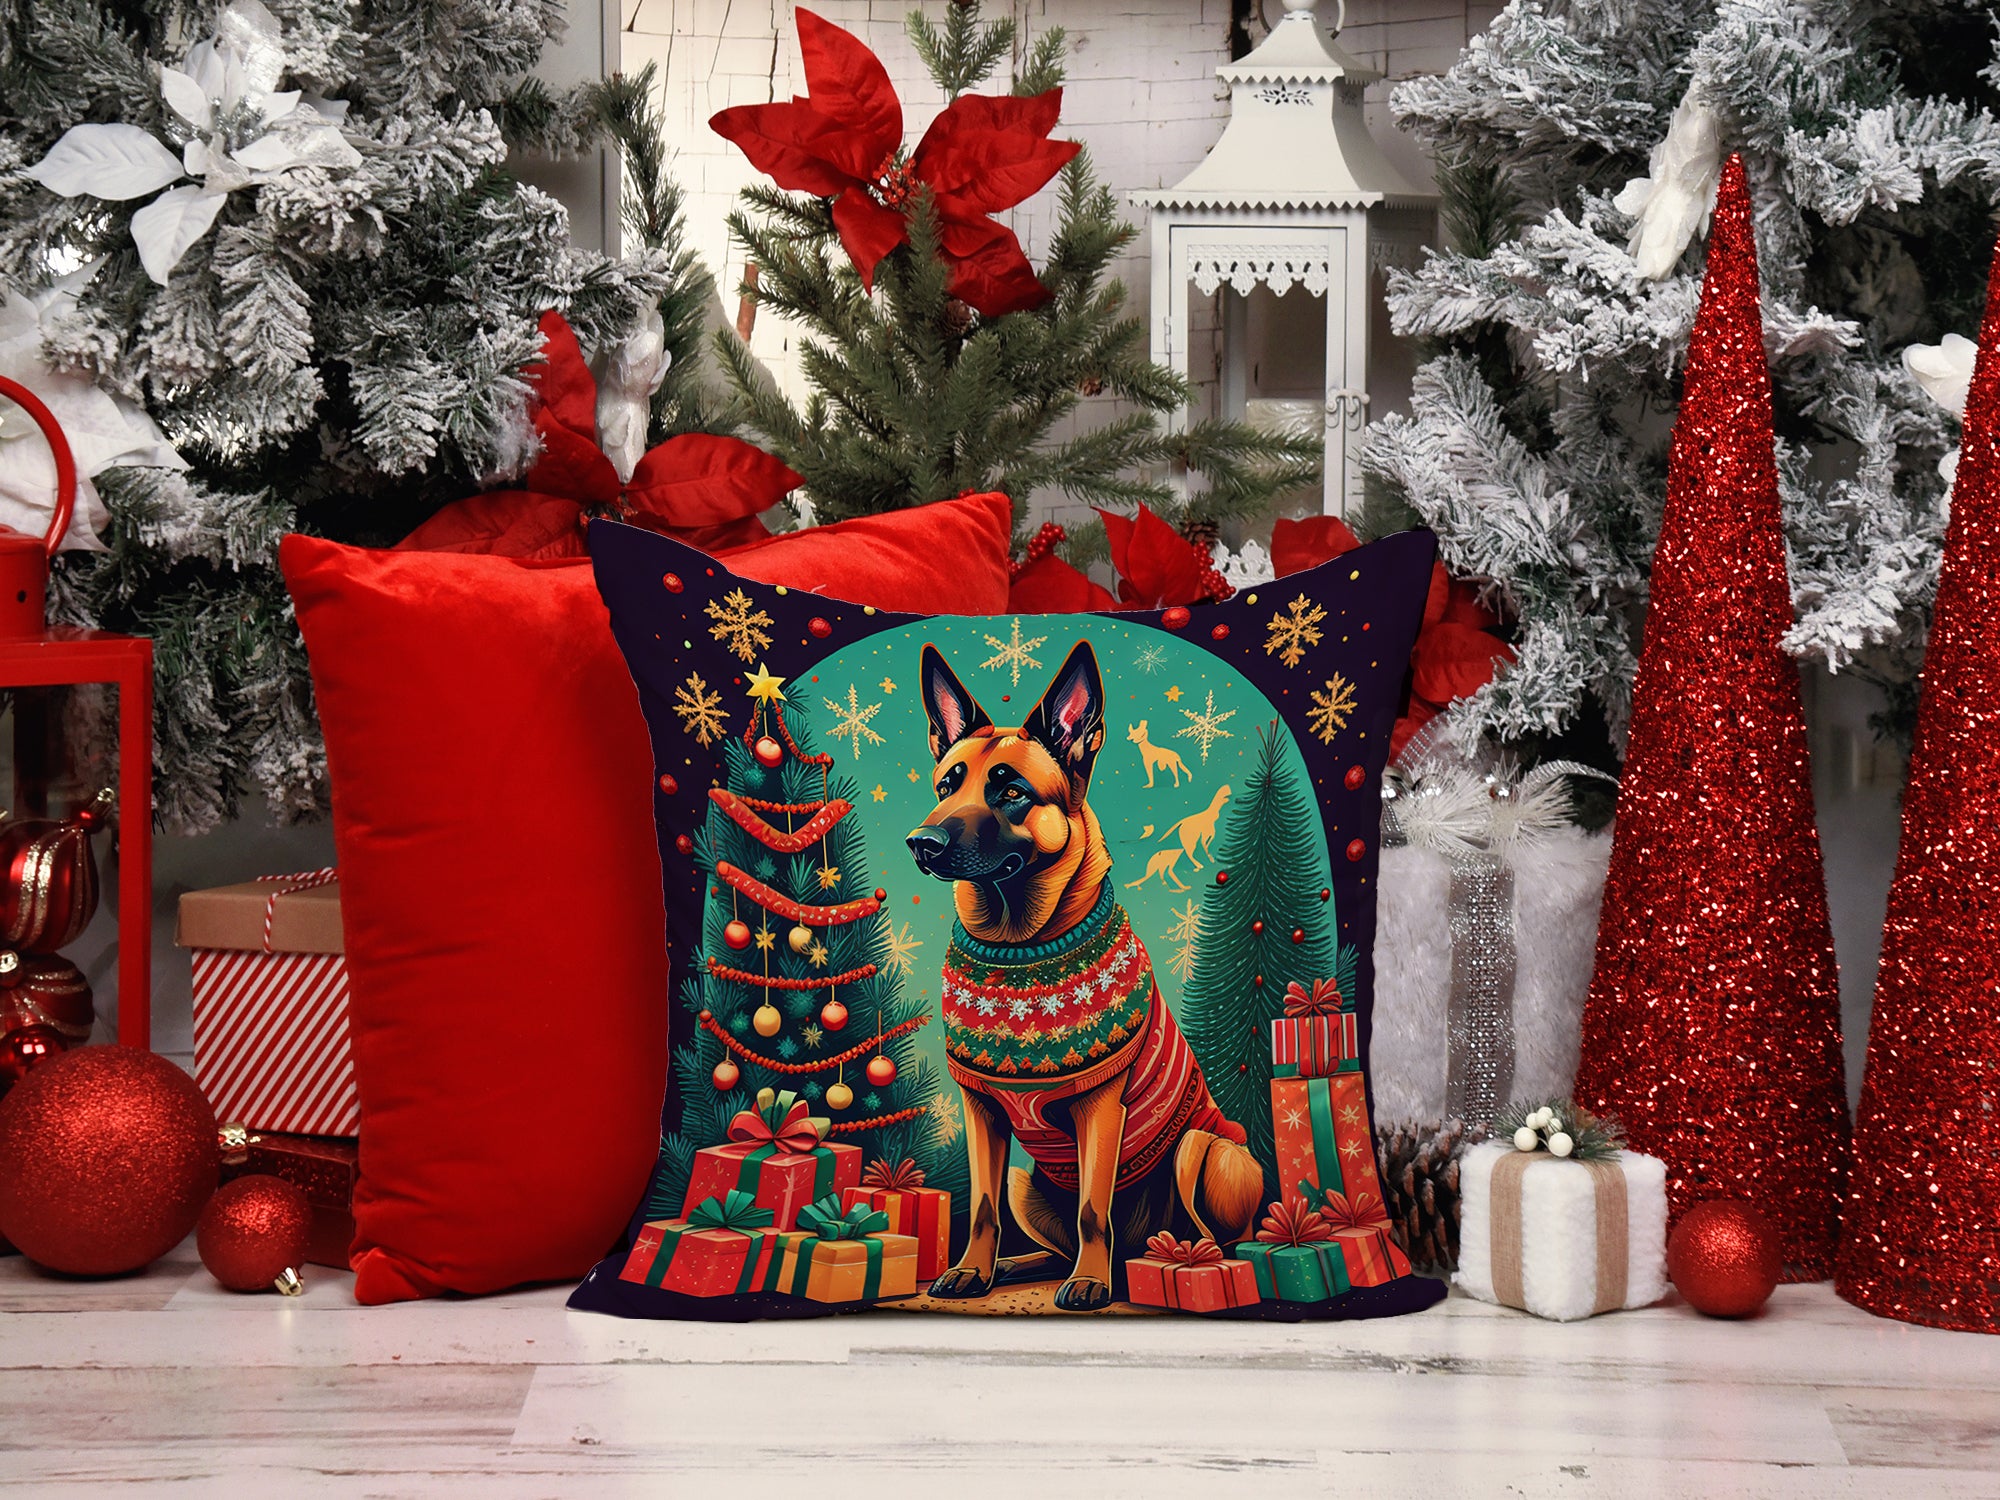 Buy this Belgian Malinois Christmas Fabric Decorative Pillow